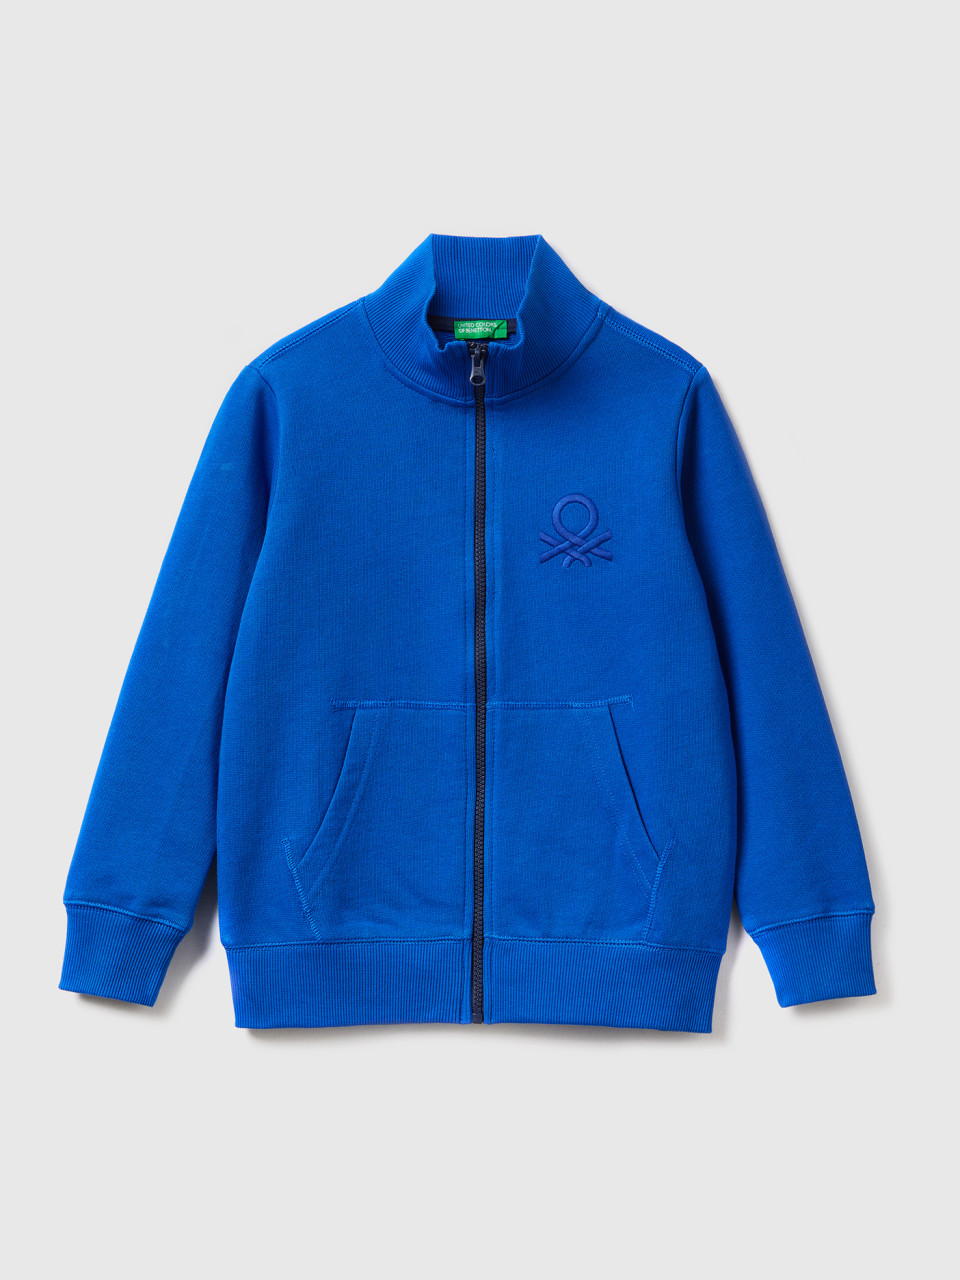 Benetton, Pure Cotton Sweatshirt With Zipper, Bright Blue, Kids